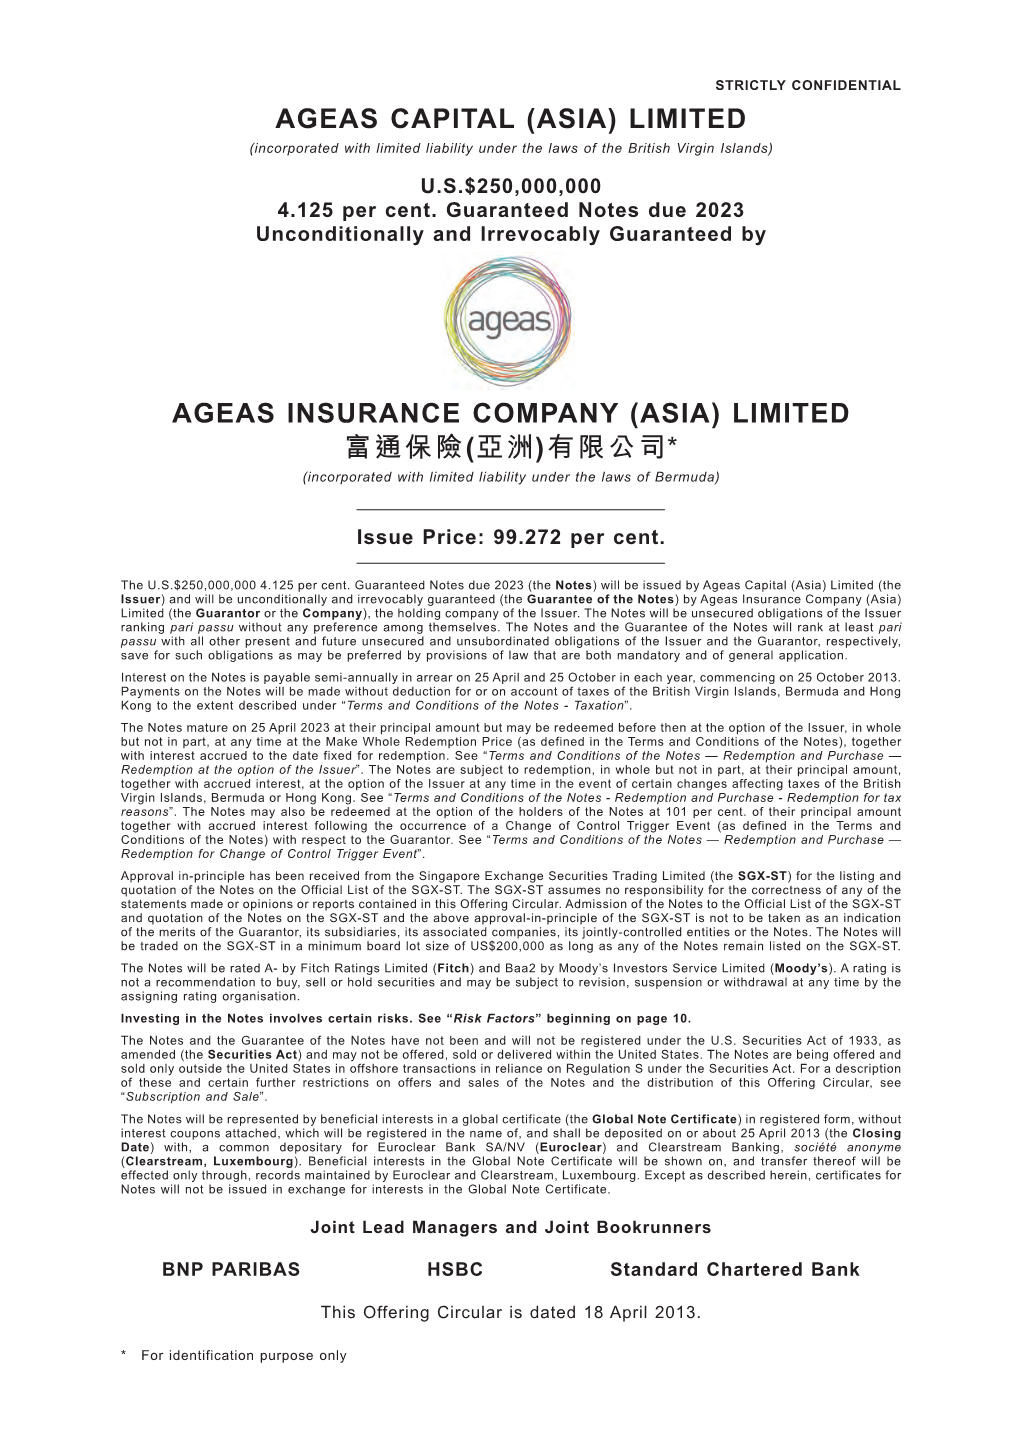 Ageas Capital (Asia) Limited Ageas Insurance Company